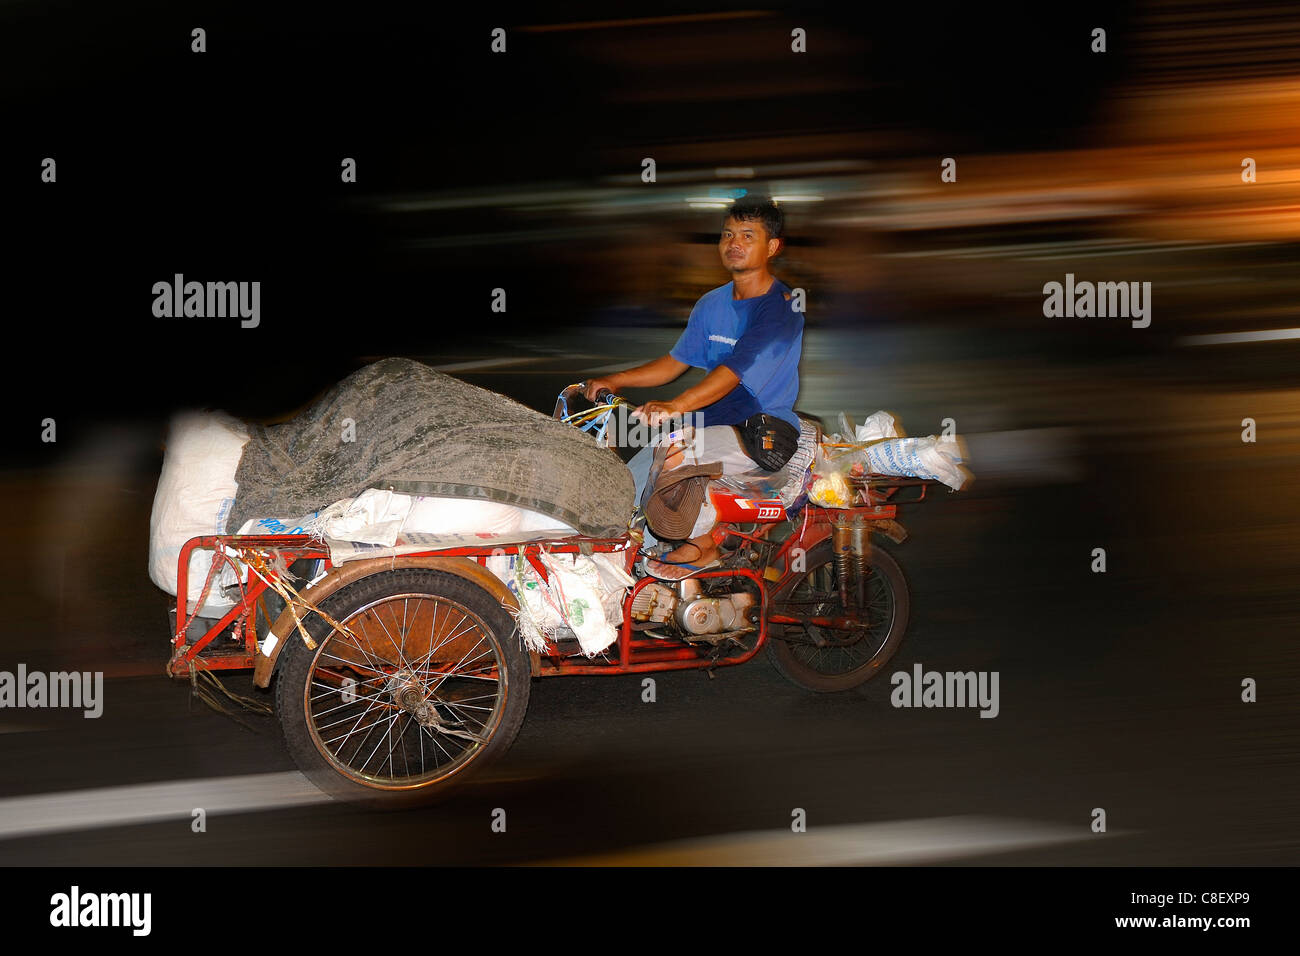 Fahrrad, Rikscha, bei Nacht, Altstadt, City, Stadt, Bangkok, Thailand, Asien, Transport Stockfoto